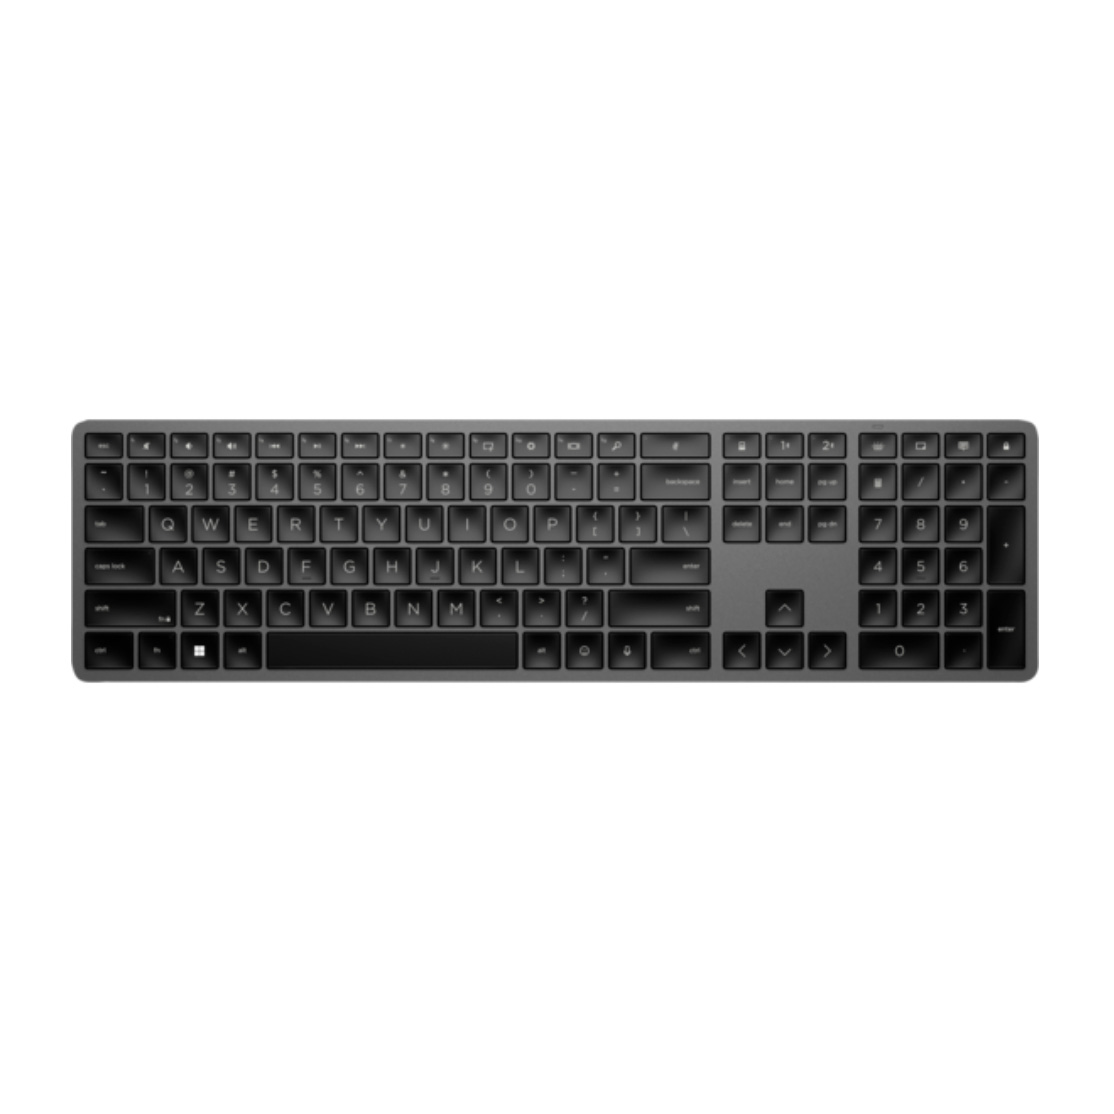 Black HP keyboard